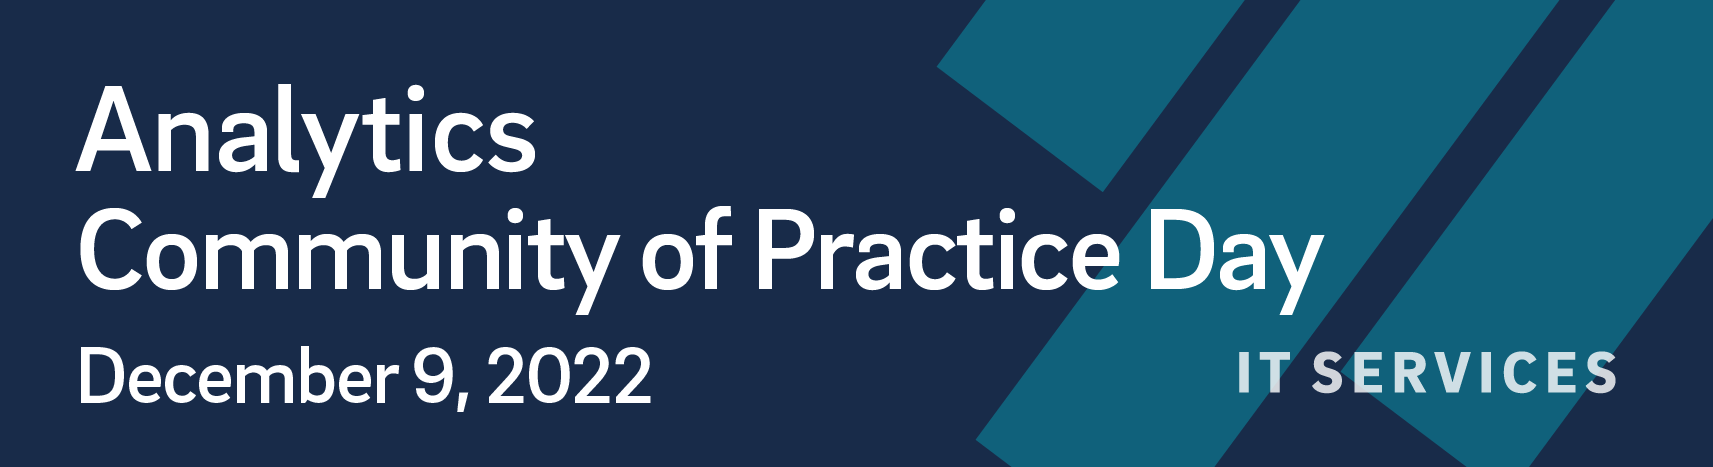 Analytics Community of Practice Day - December 9, 2022